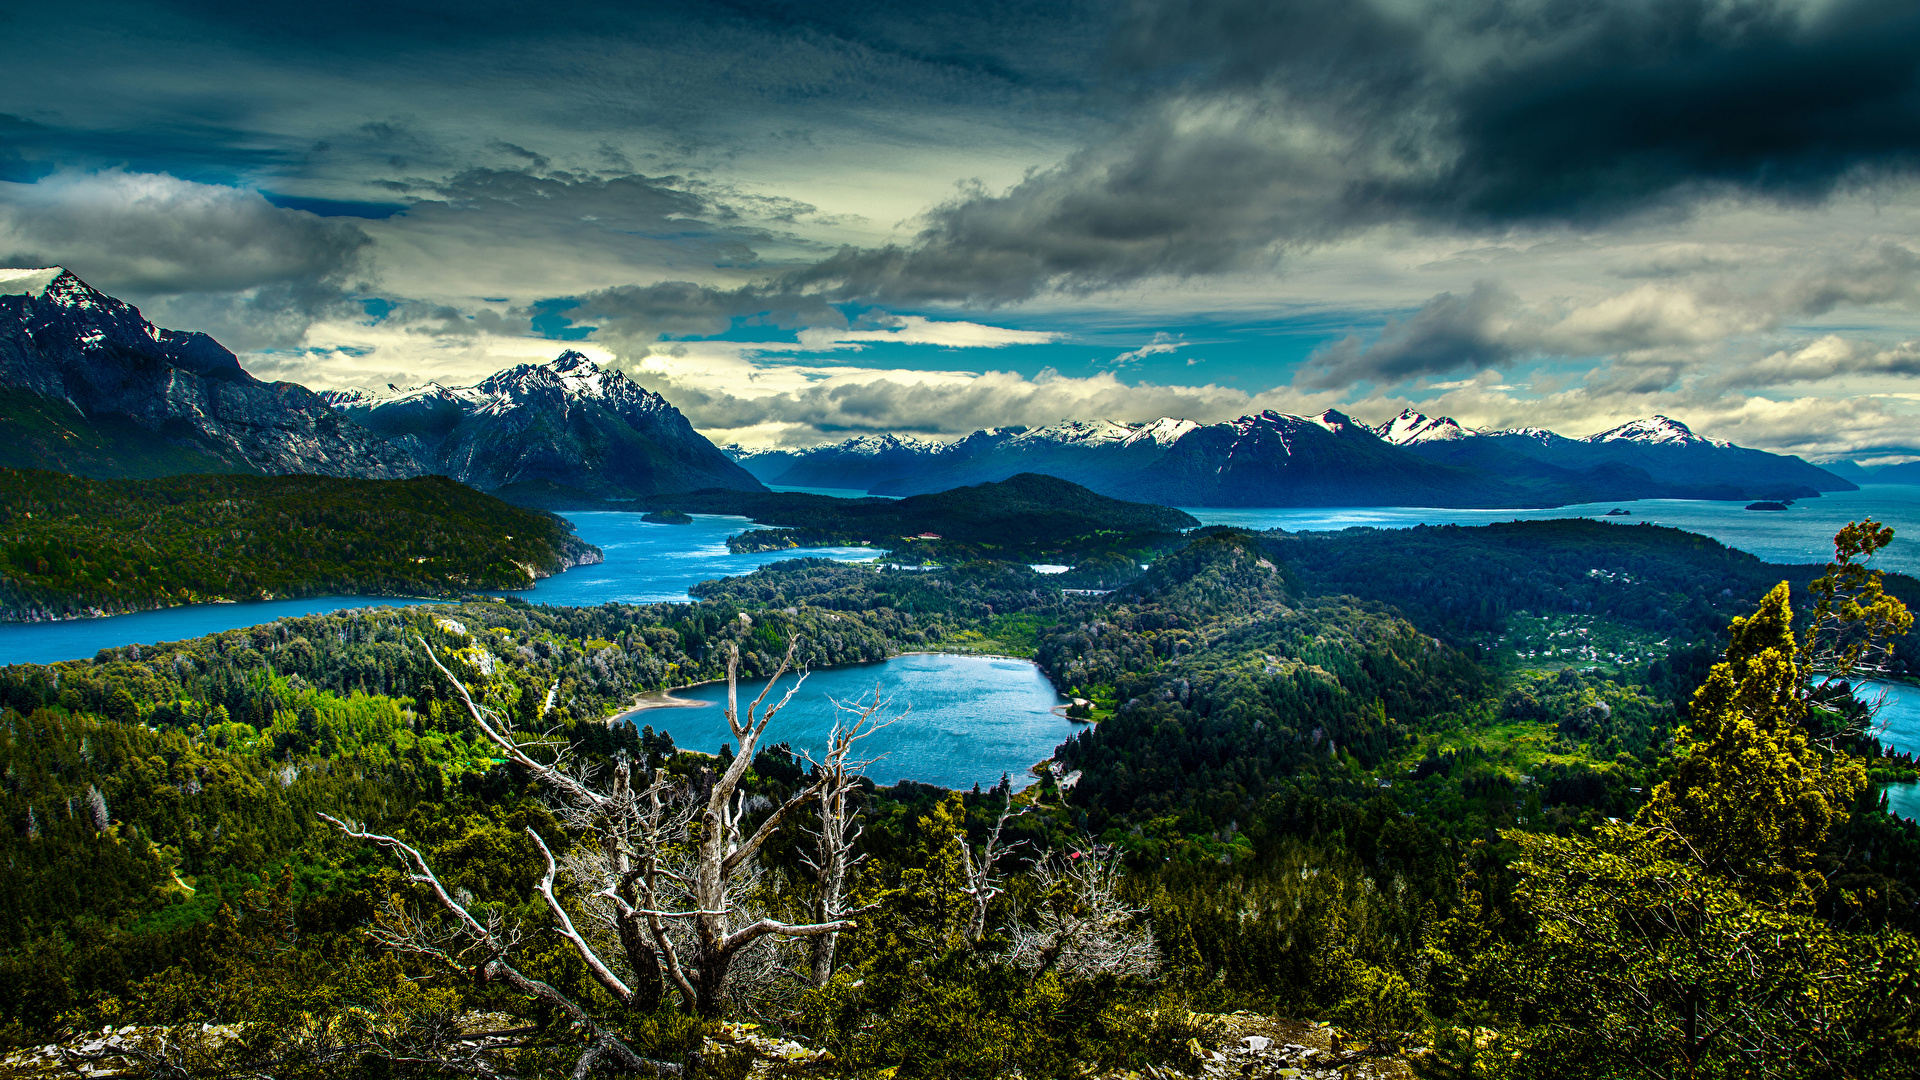 General 1920x1080 lake nahuel huapi Patagonia landscape nature